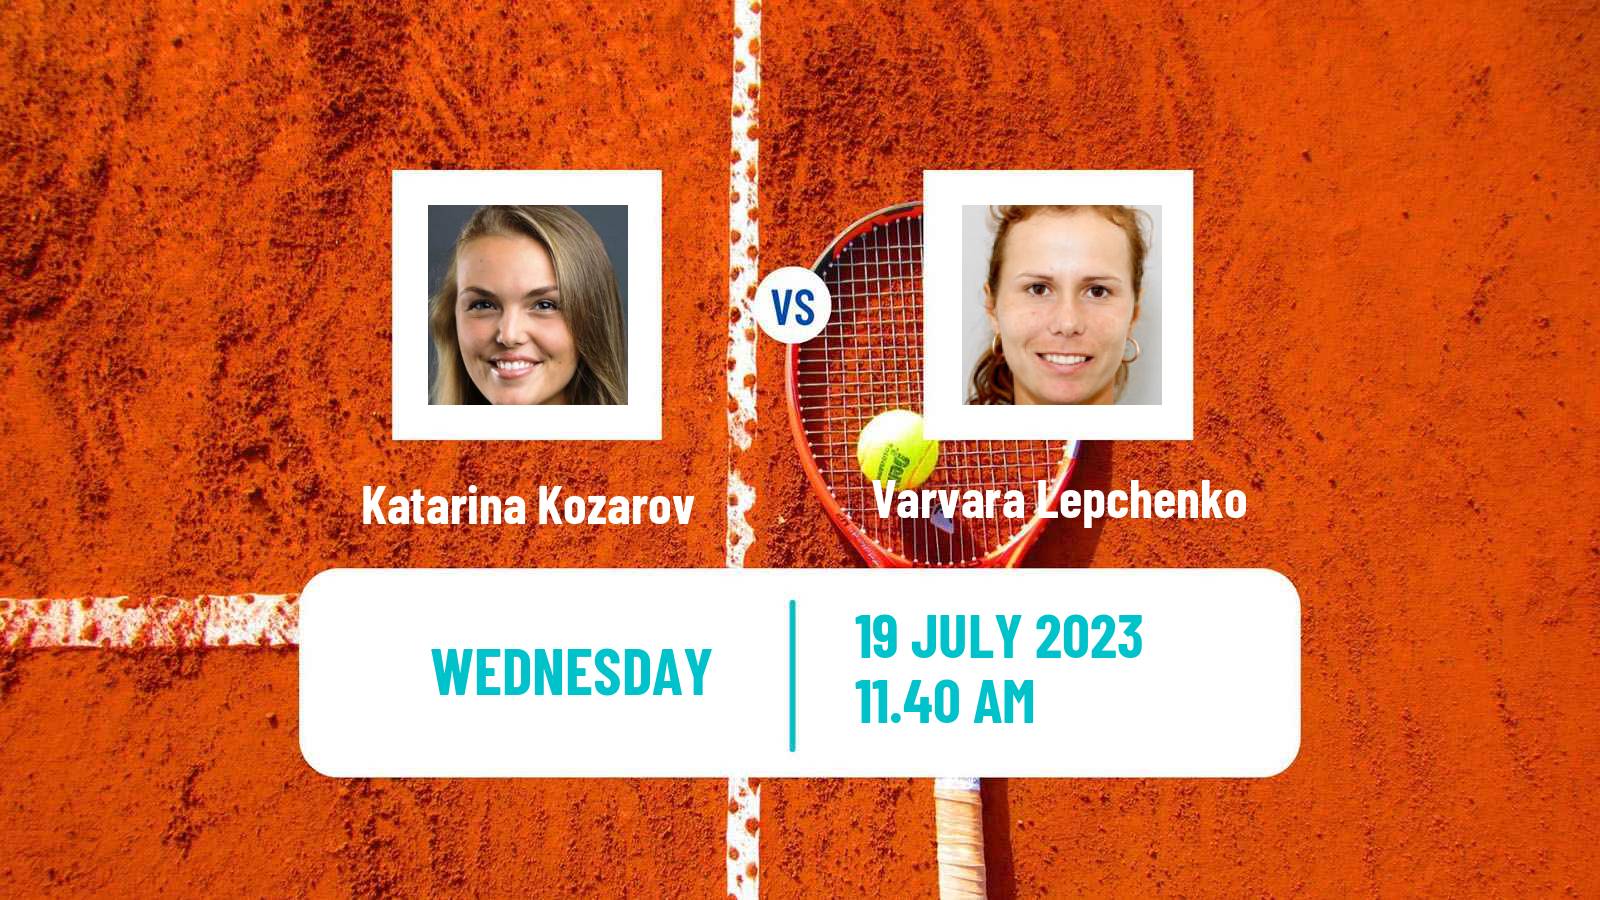 Tennis ITF W60 Evansville In Women Katarina Kozarov - Varvara Lepchenko